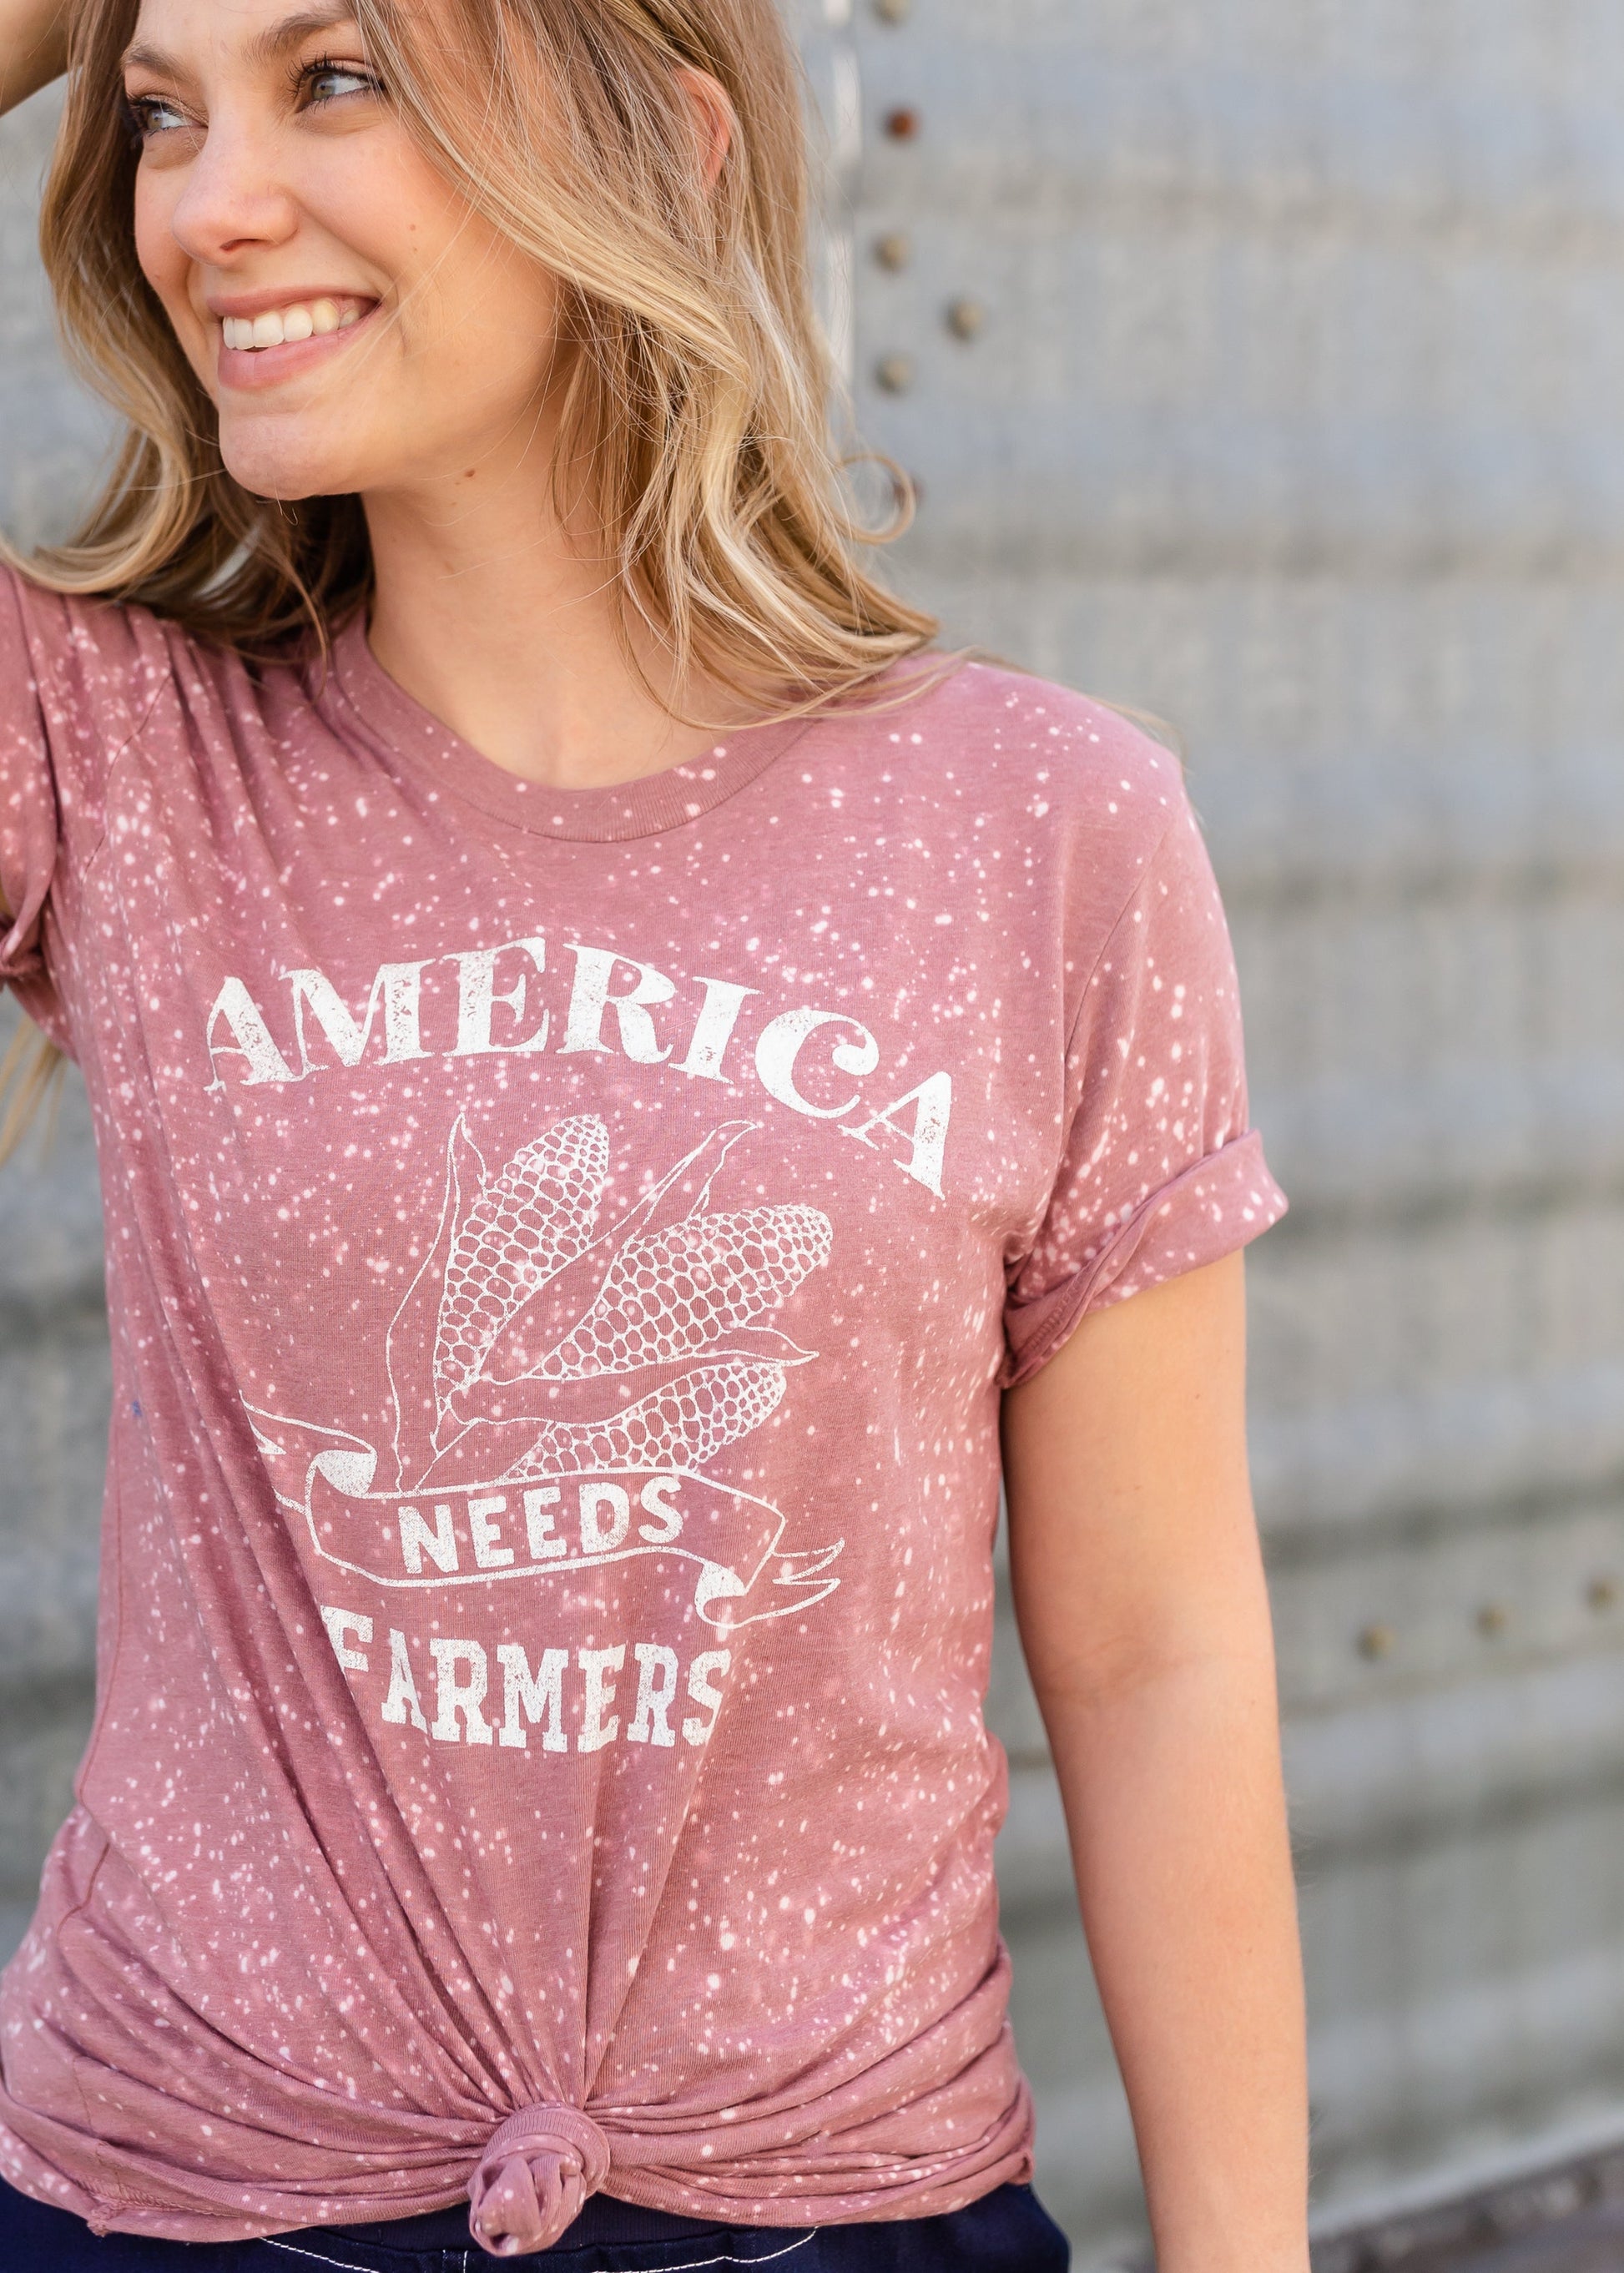 America Needs Farmers T-Shirt Tops